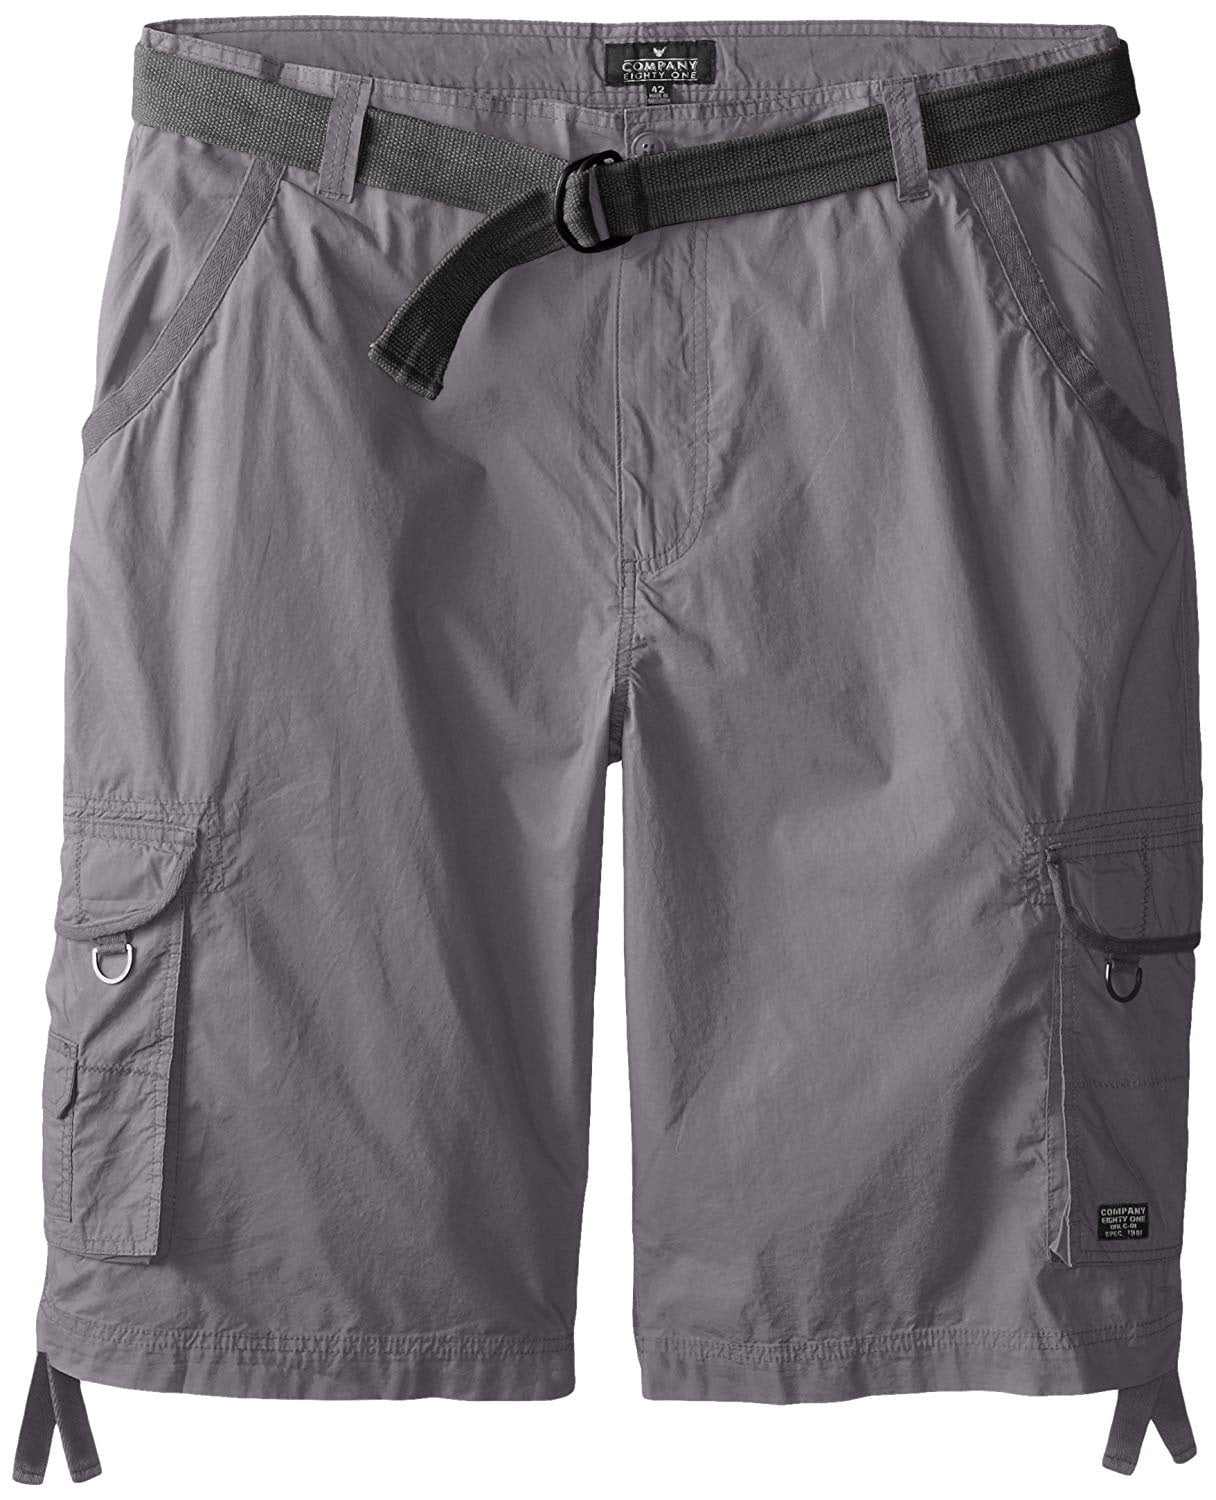 Company 81 Mens Big-Tall Special Ops Cargo Shorts 